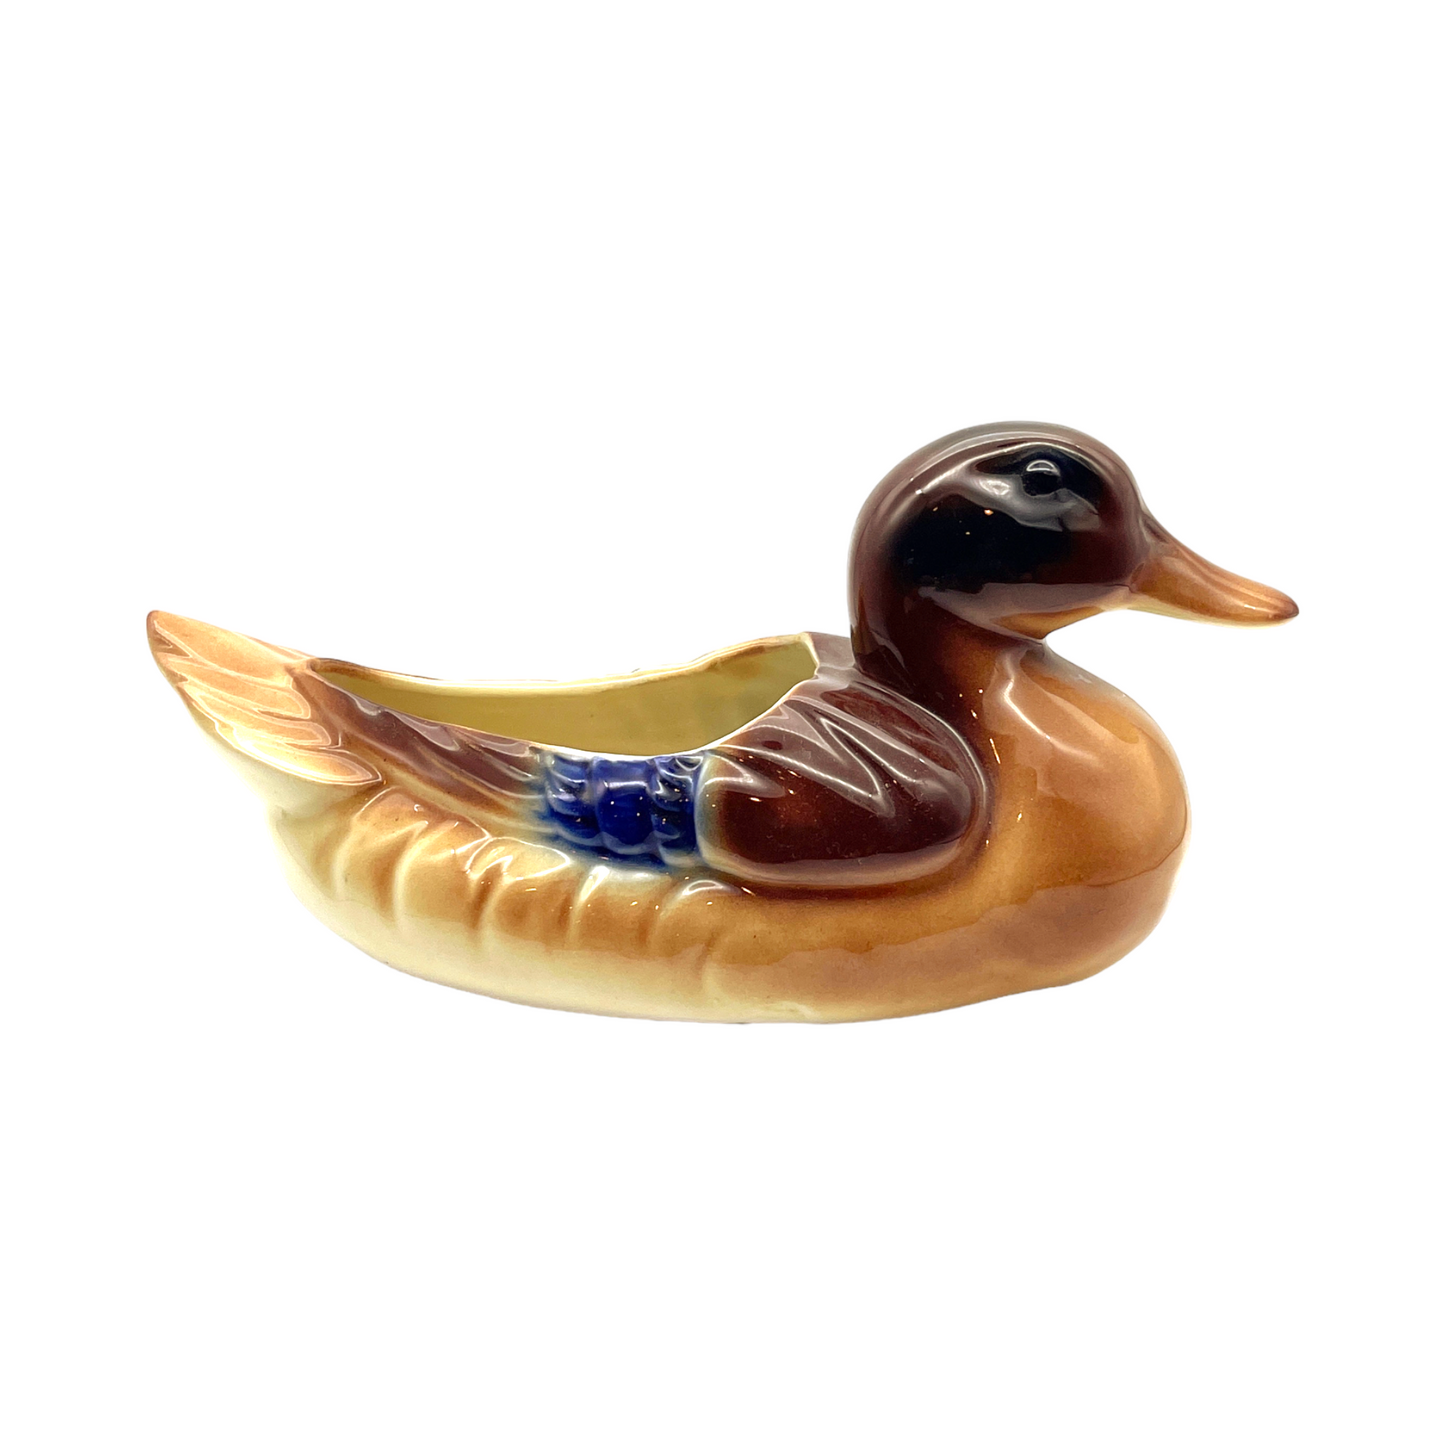 Royal Copley - Sitting Duck Planter - Vintage - 4.5"